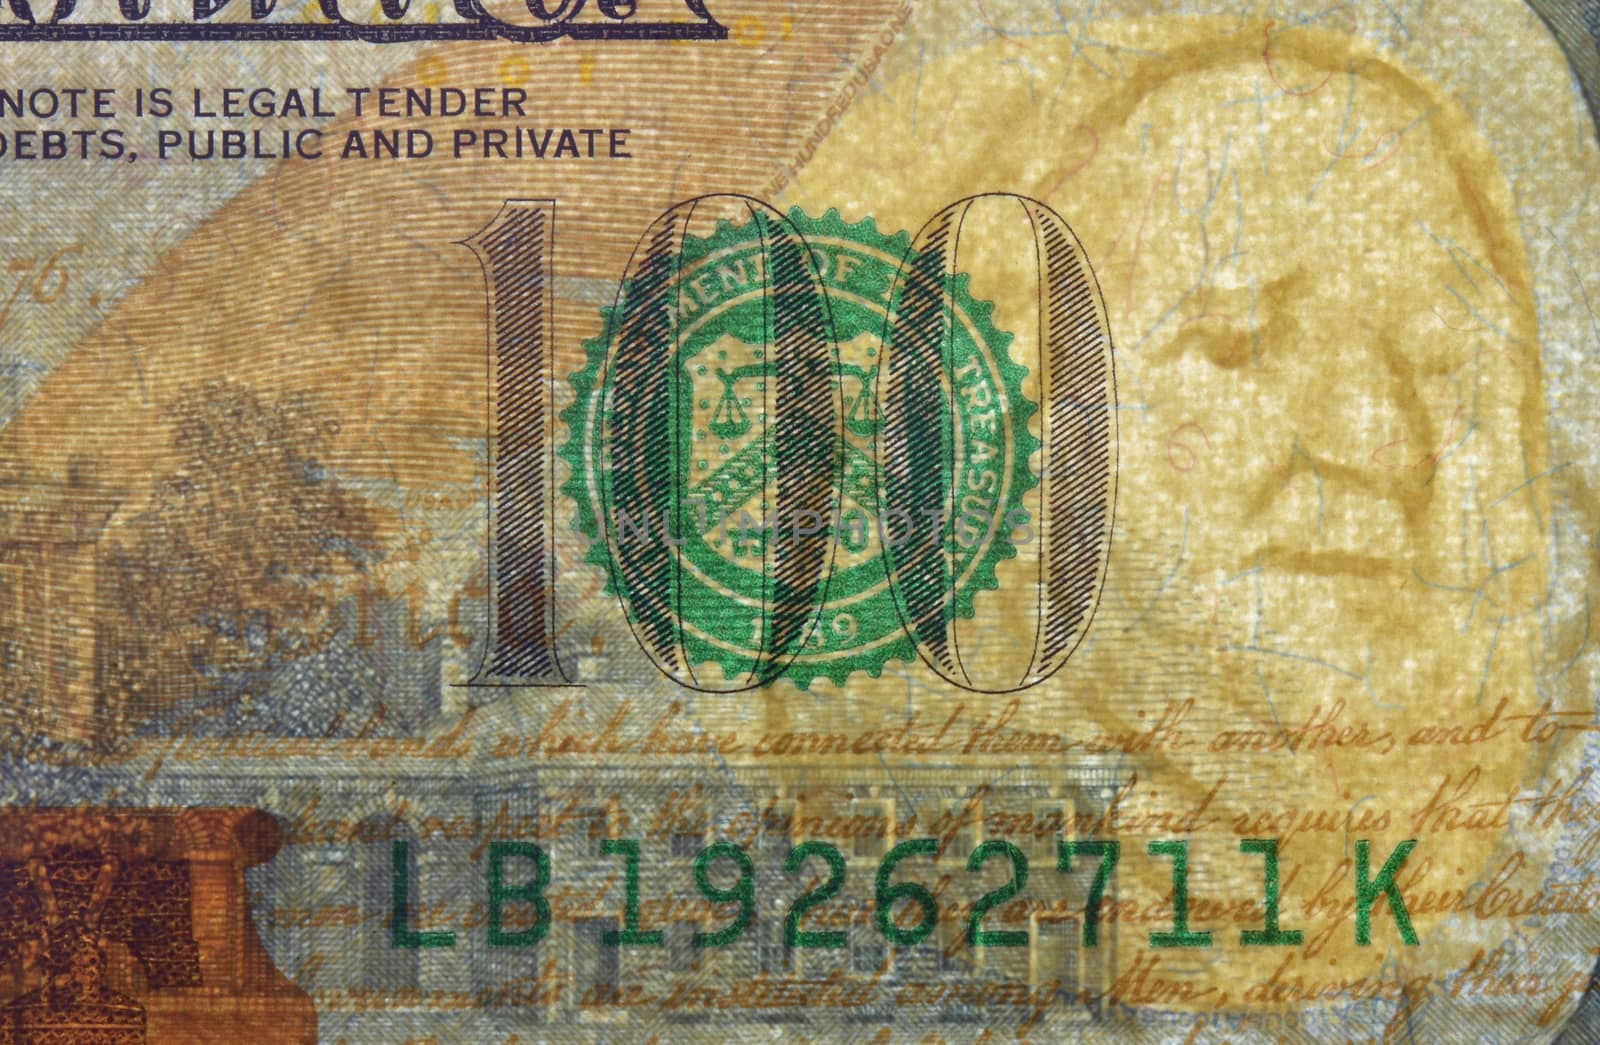 Watermark on redesigned new hundred dollar bill